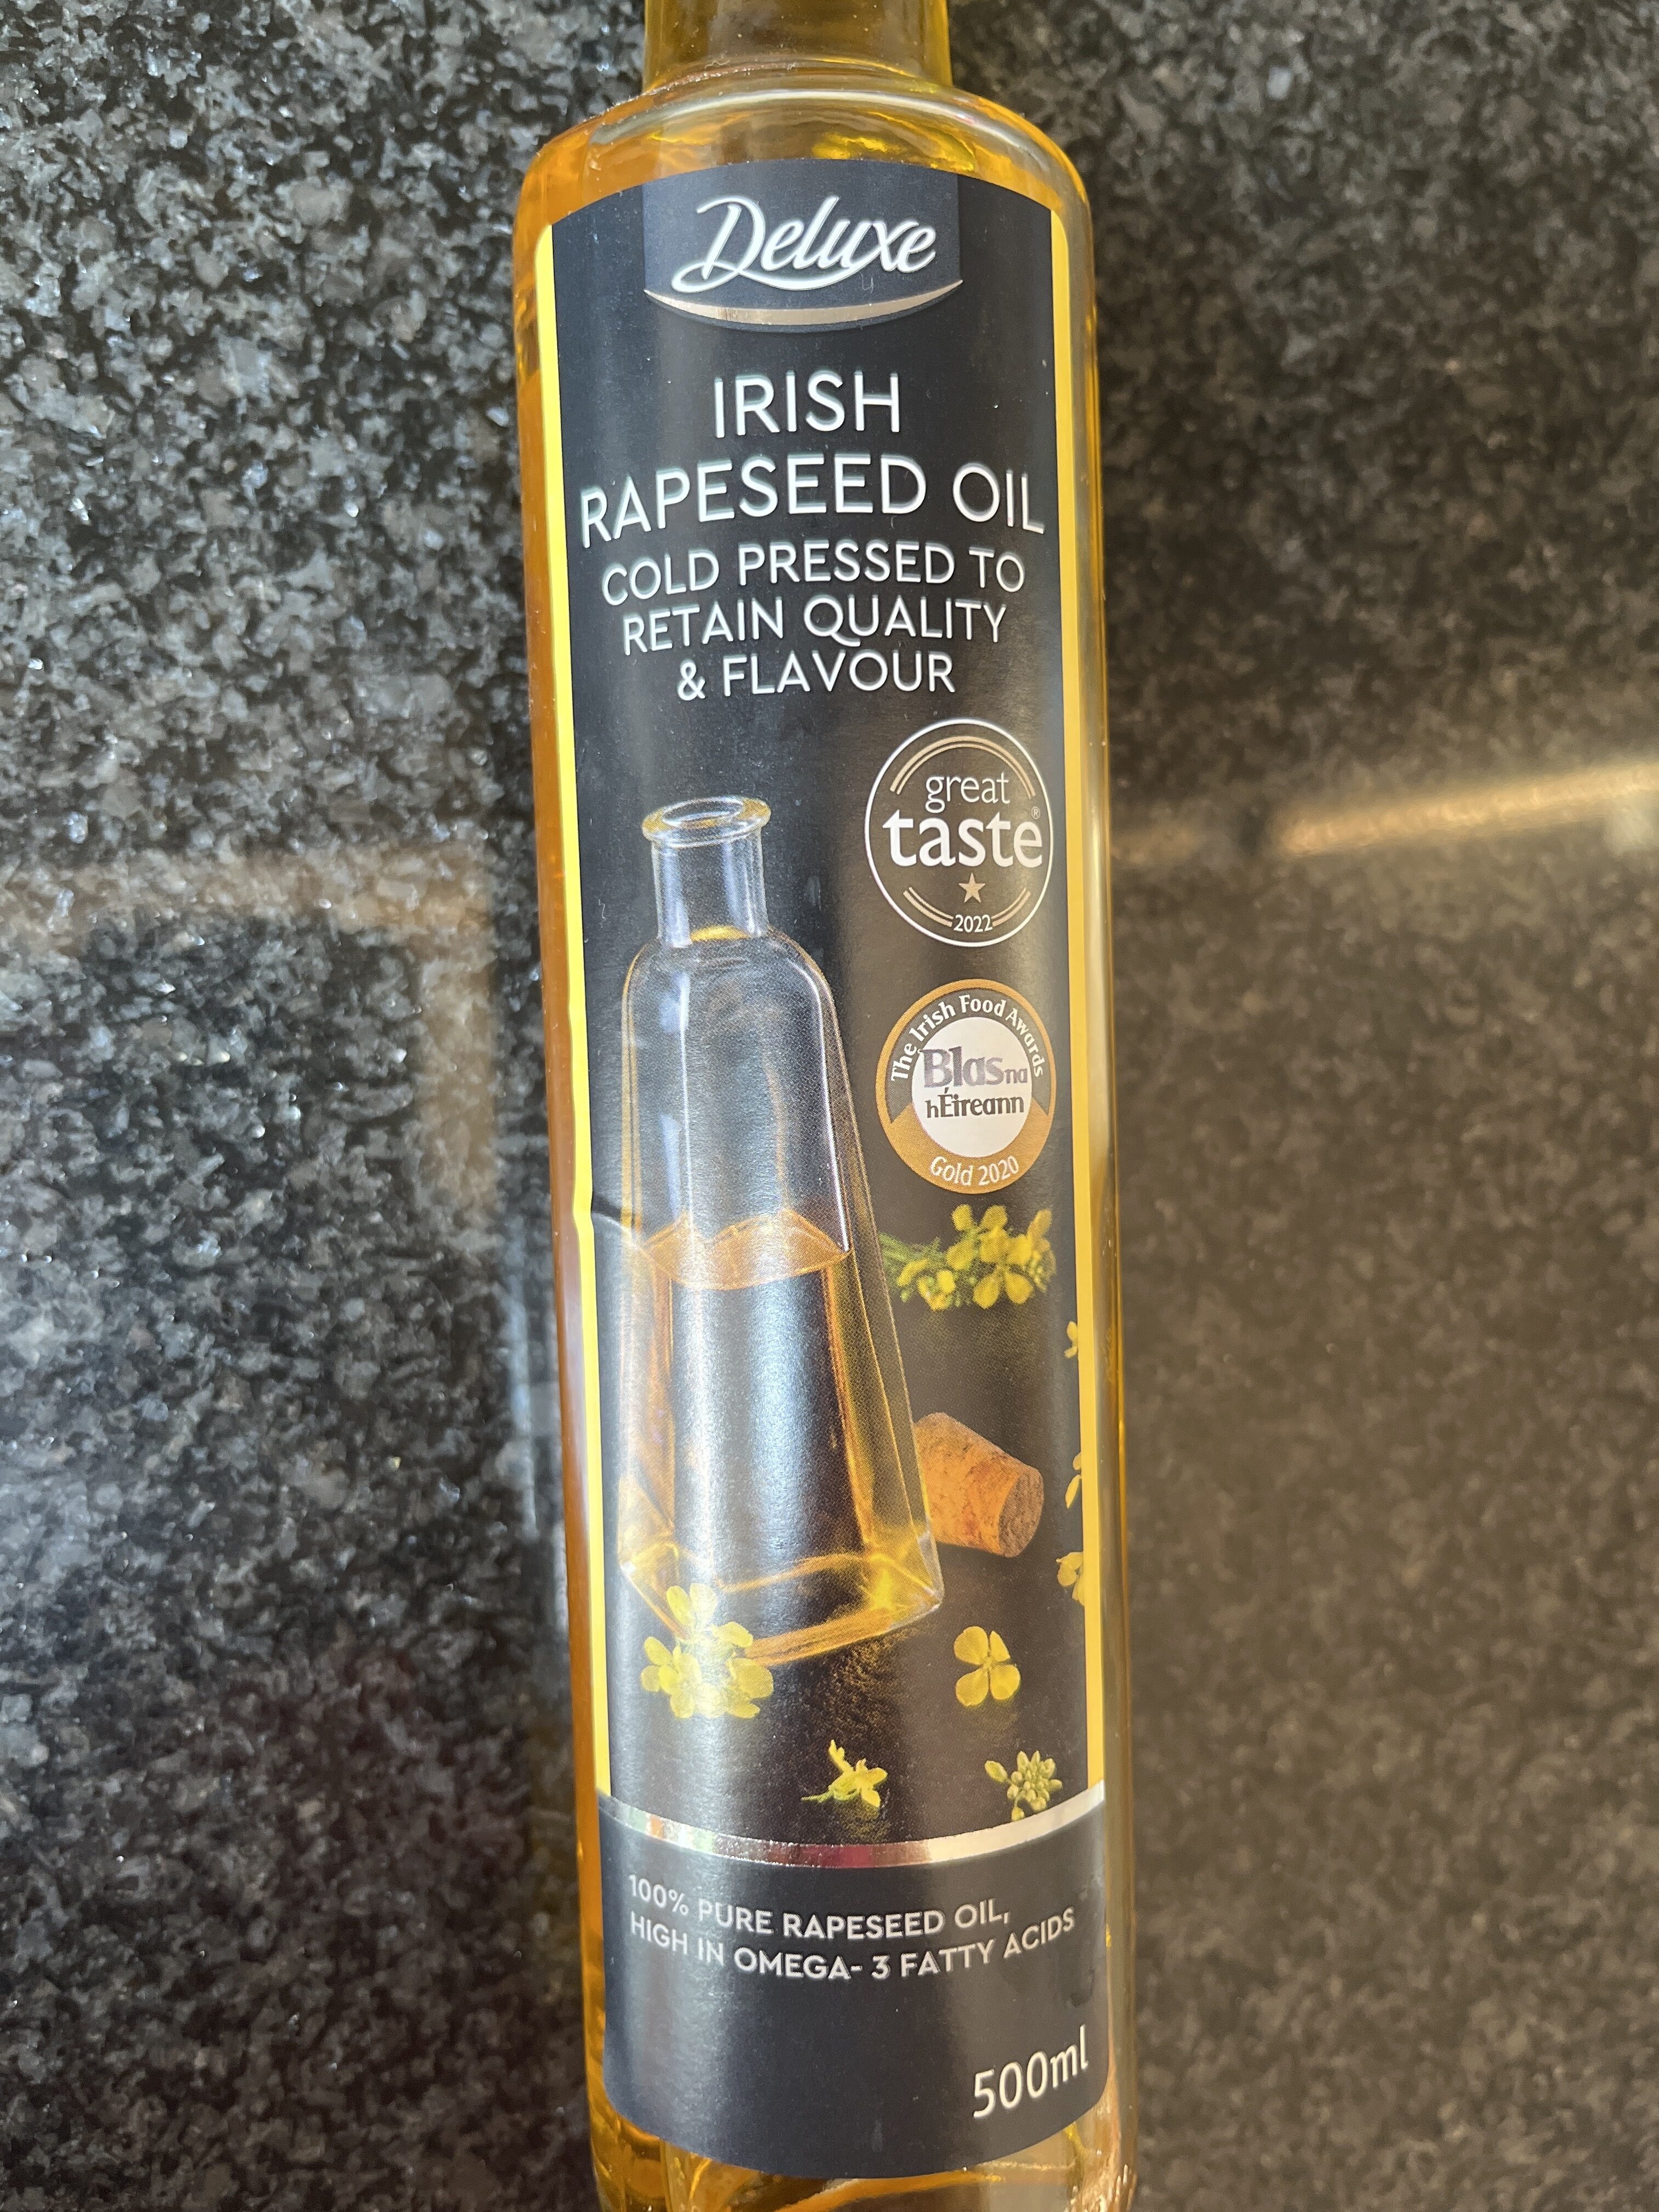 Irish Rapeseed Oil - Ingredients